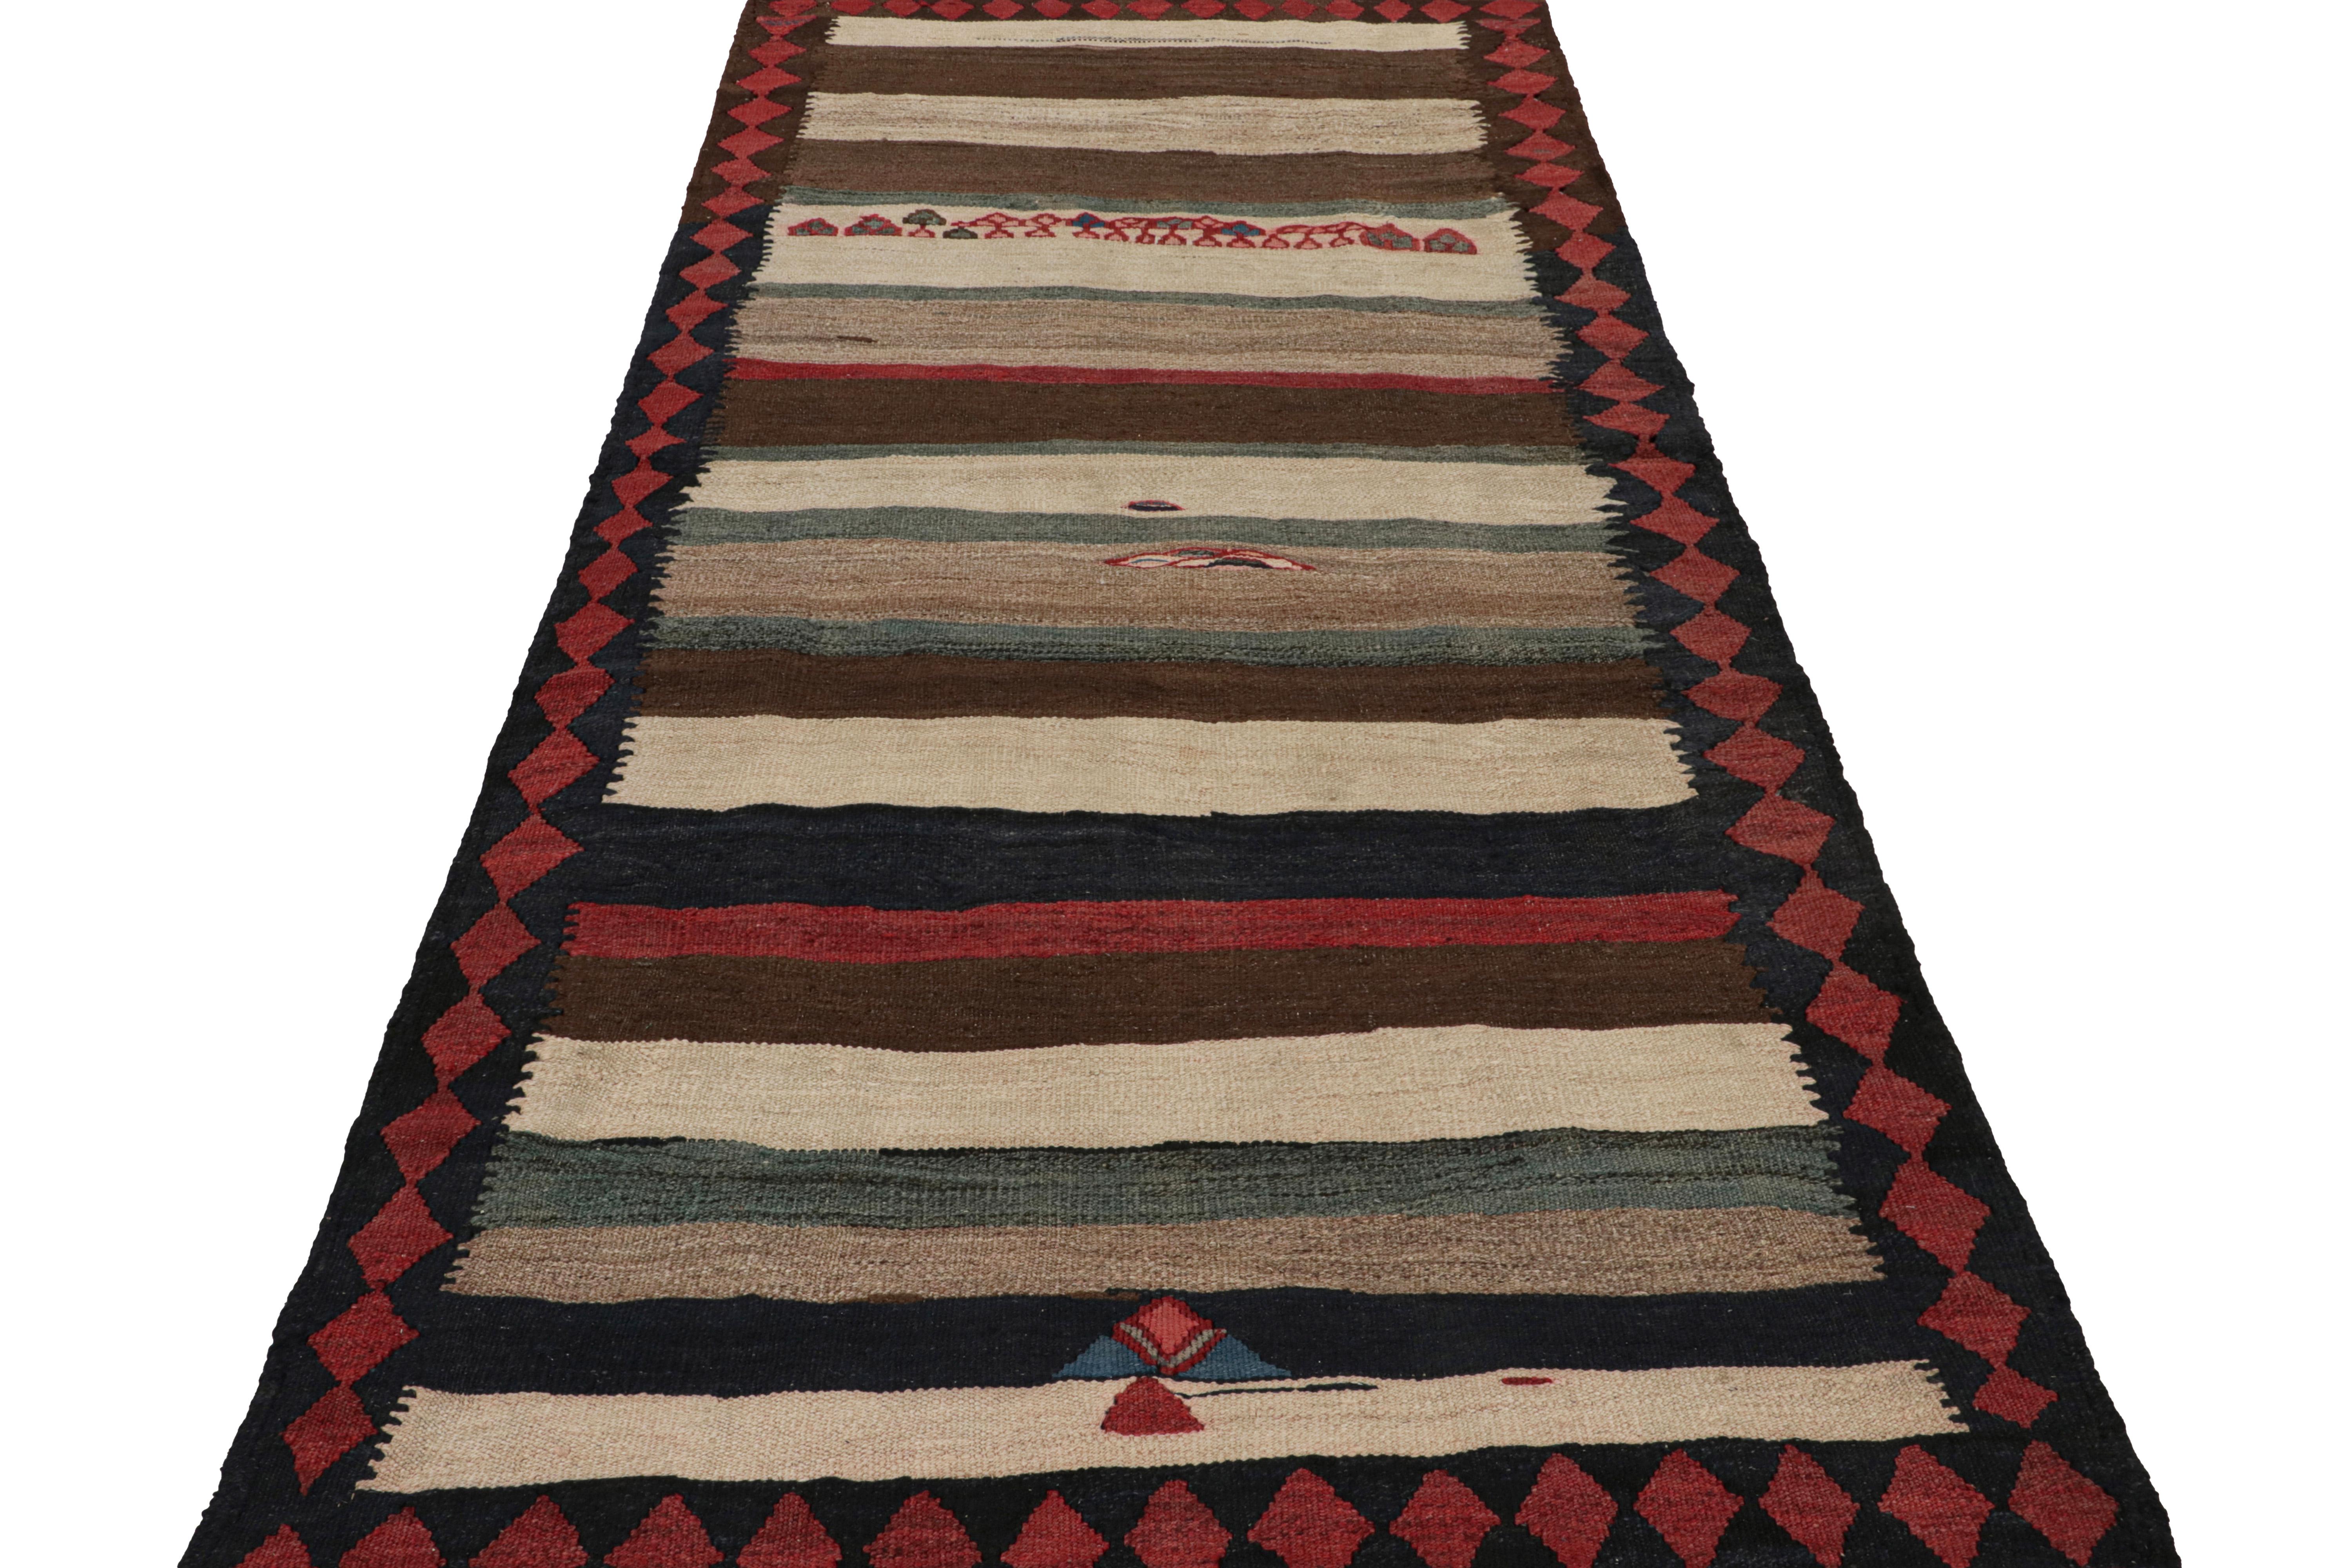 Tribal Vintage Shahsavan Persian tribal Kilim rug, with Stripes, from Rug & Kilim For Sale